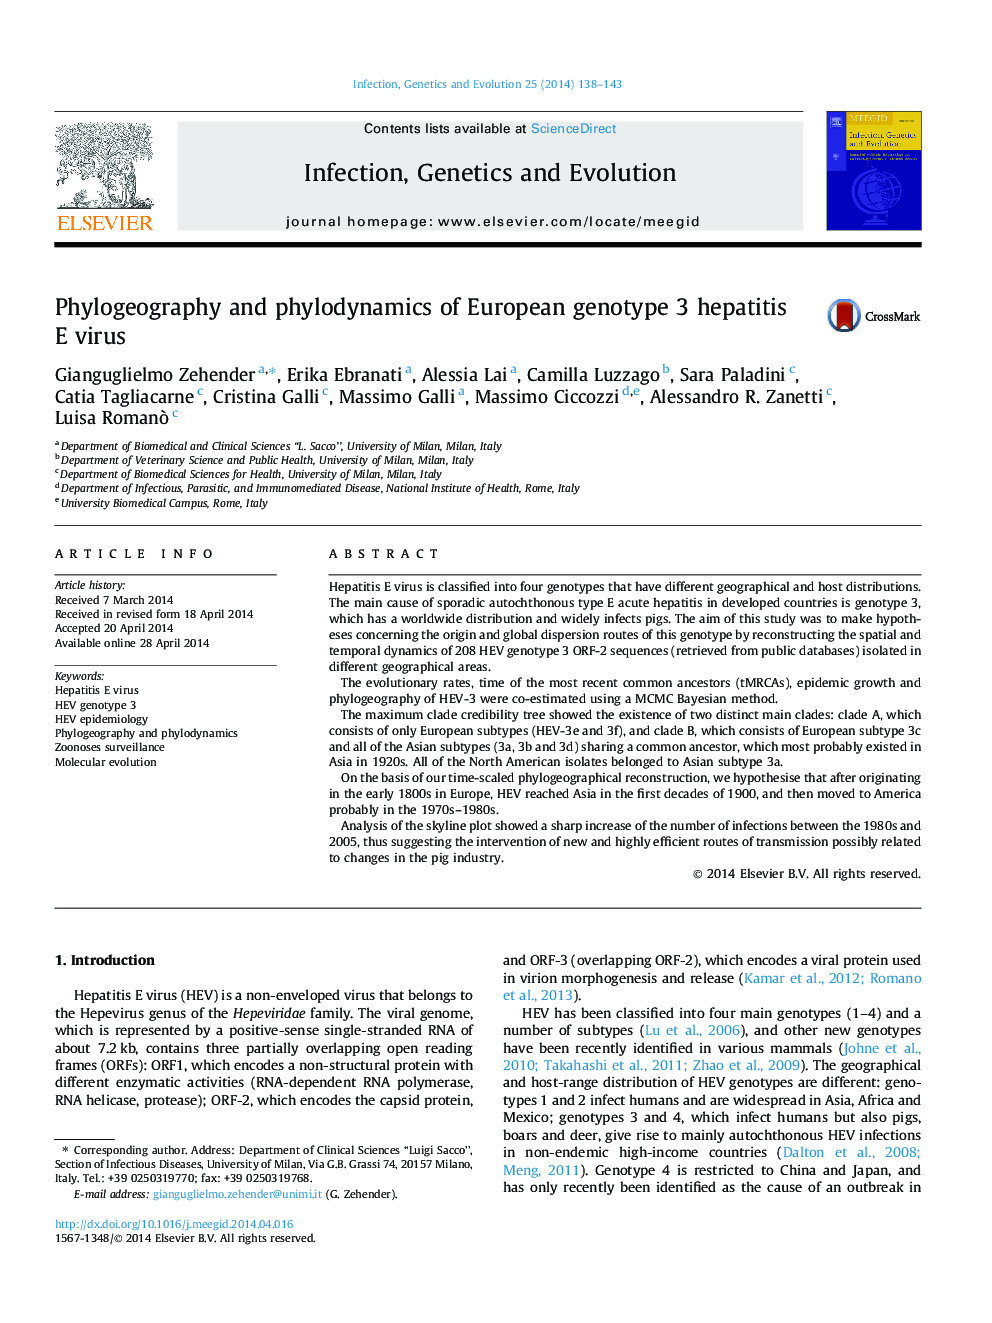 Phylogeography and phylodynamics of European genotype 3 hepatitis E virus